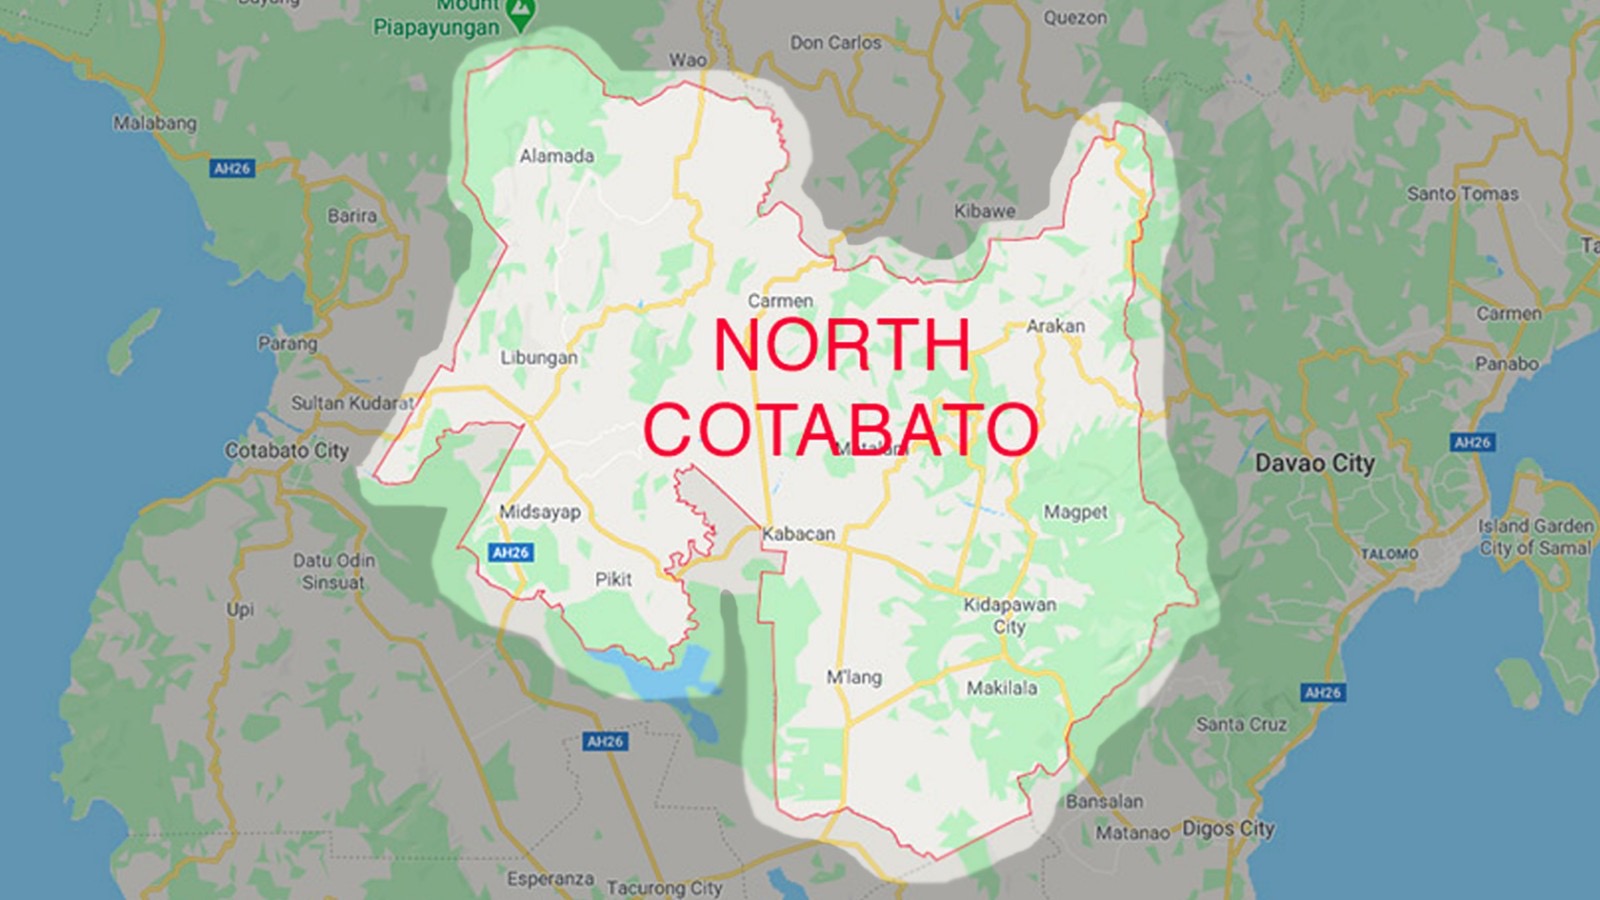 MP Abas files bill to establish special geographic area field health office in North Cotabato